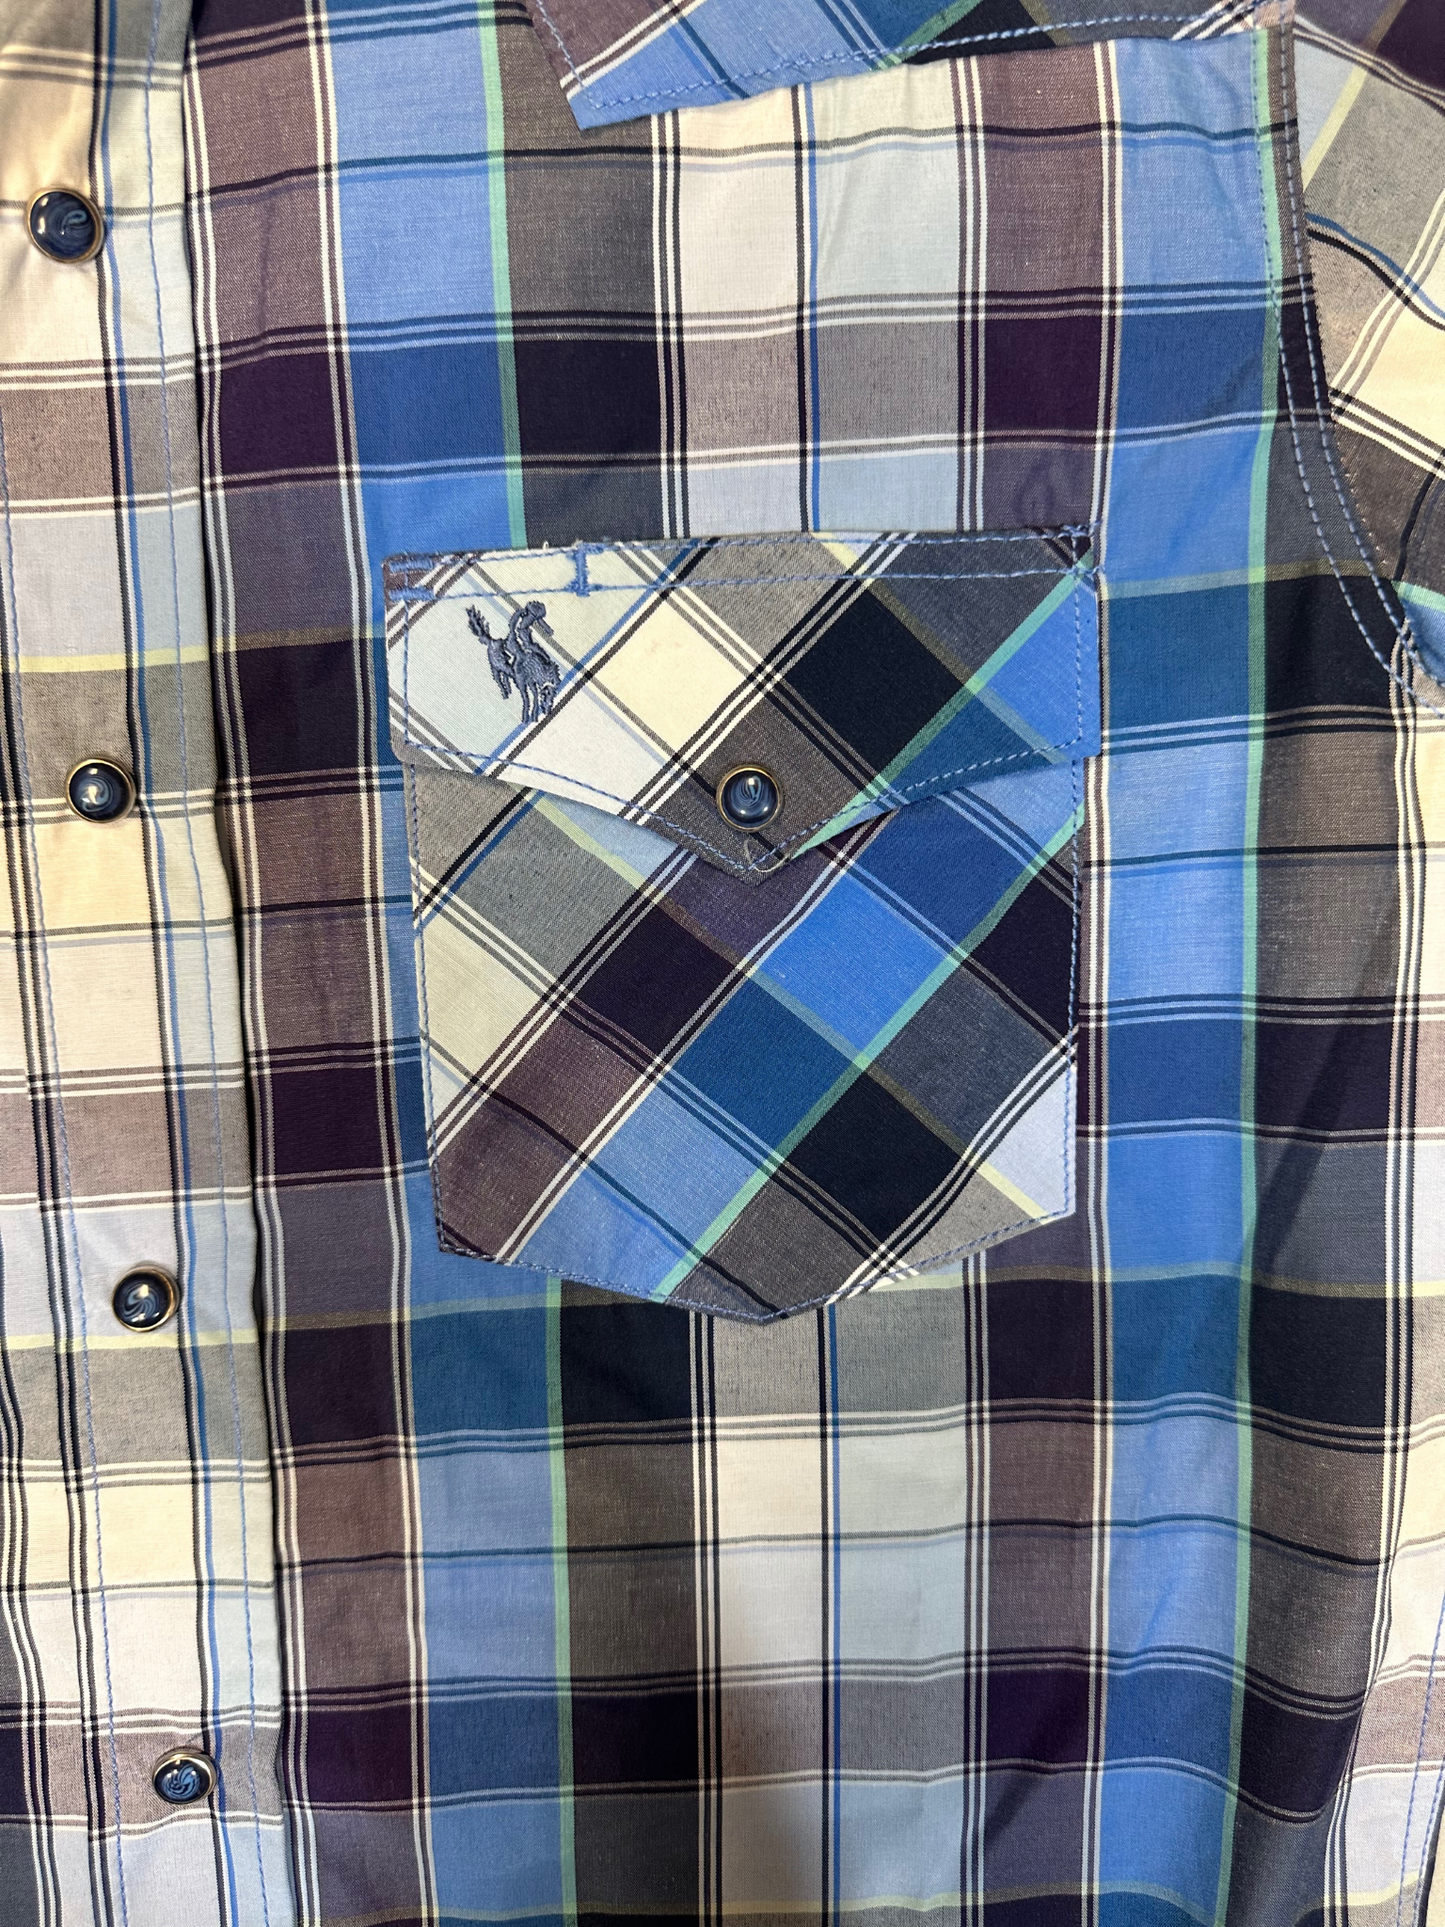 Men's Rodeo Plaid Short Sleeve Button Down Shirt - Blue